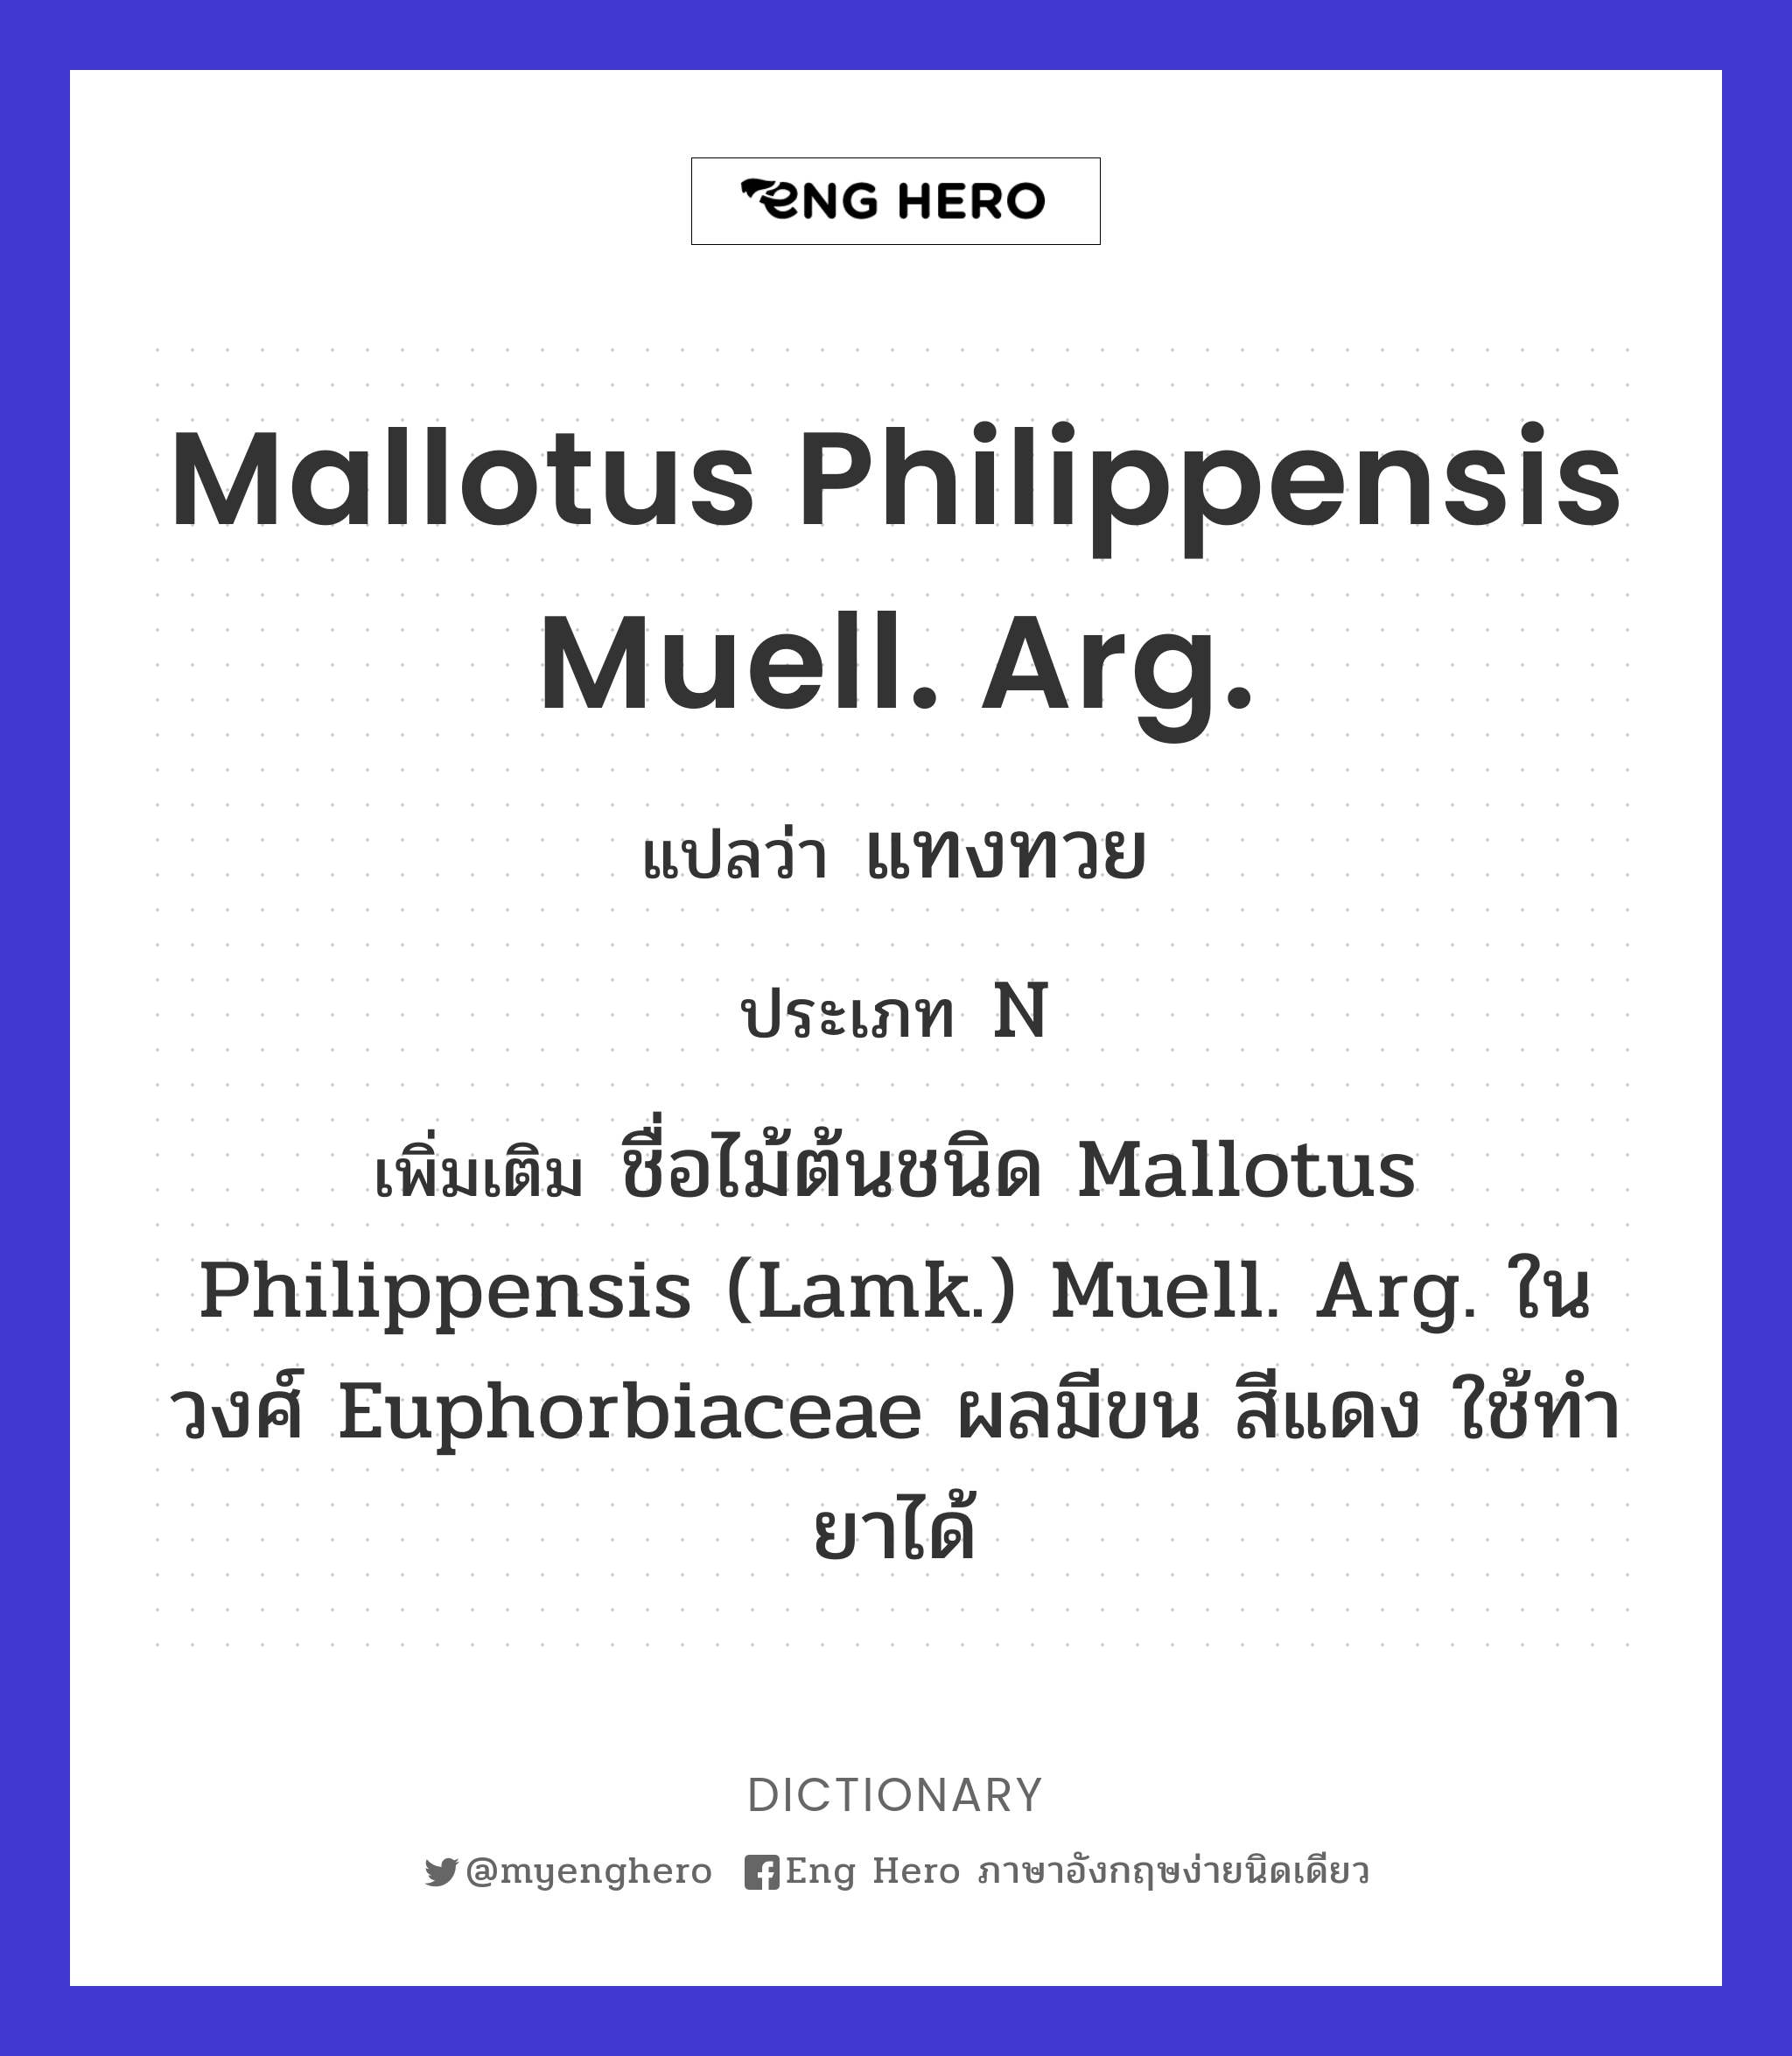 Mallotus philippensis Muell. Arg.